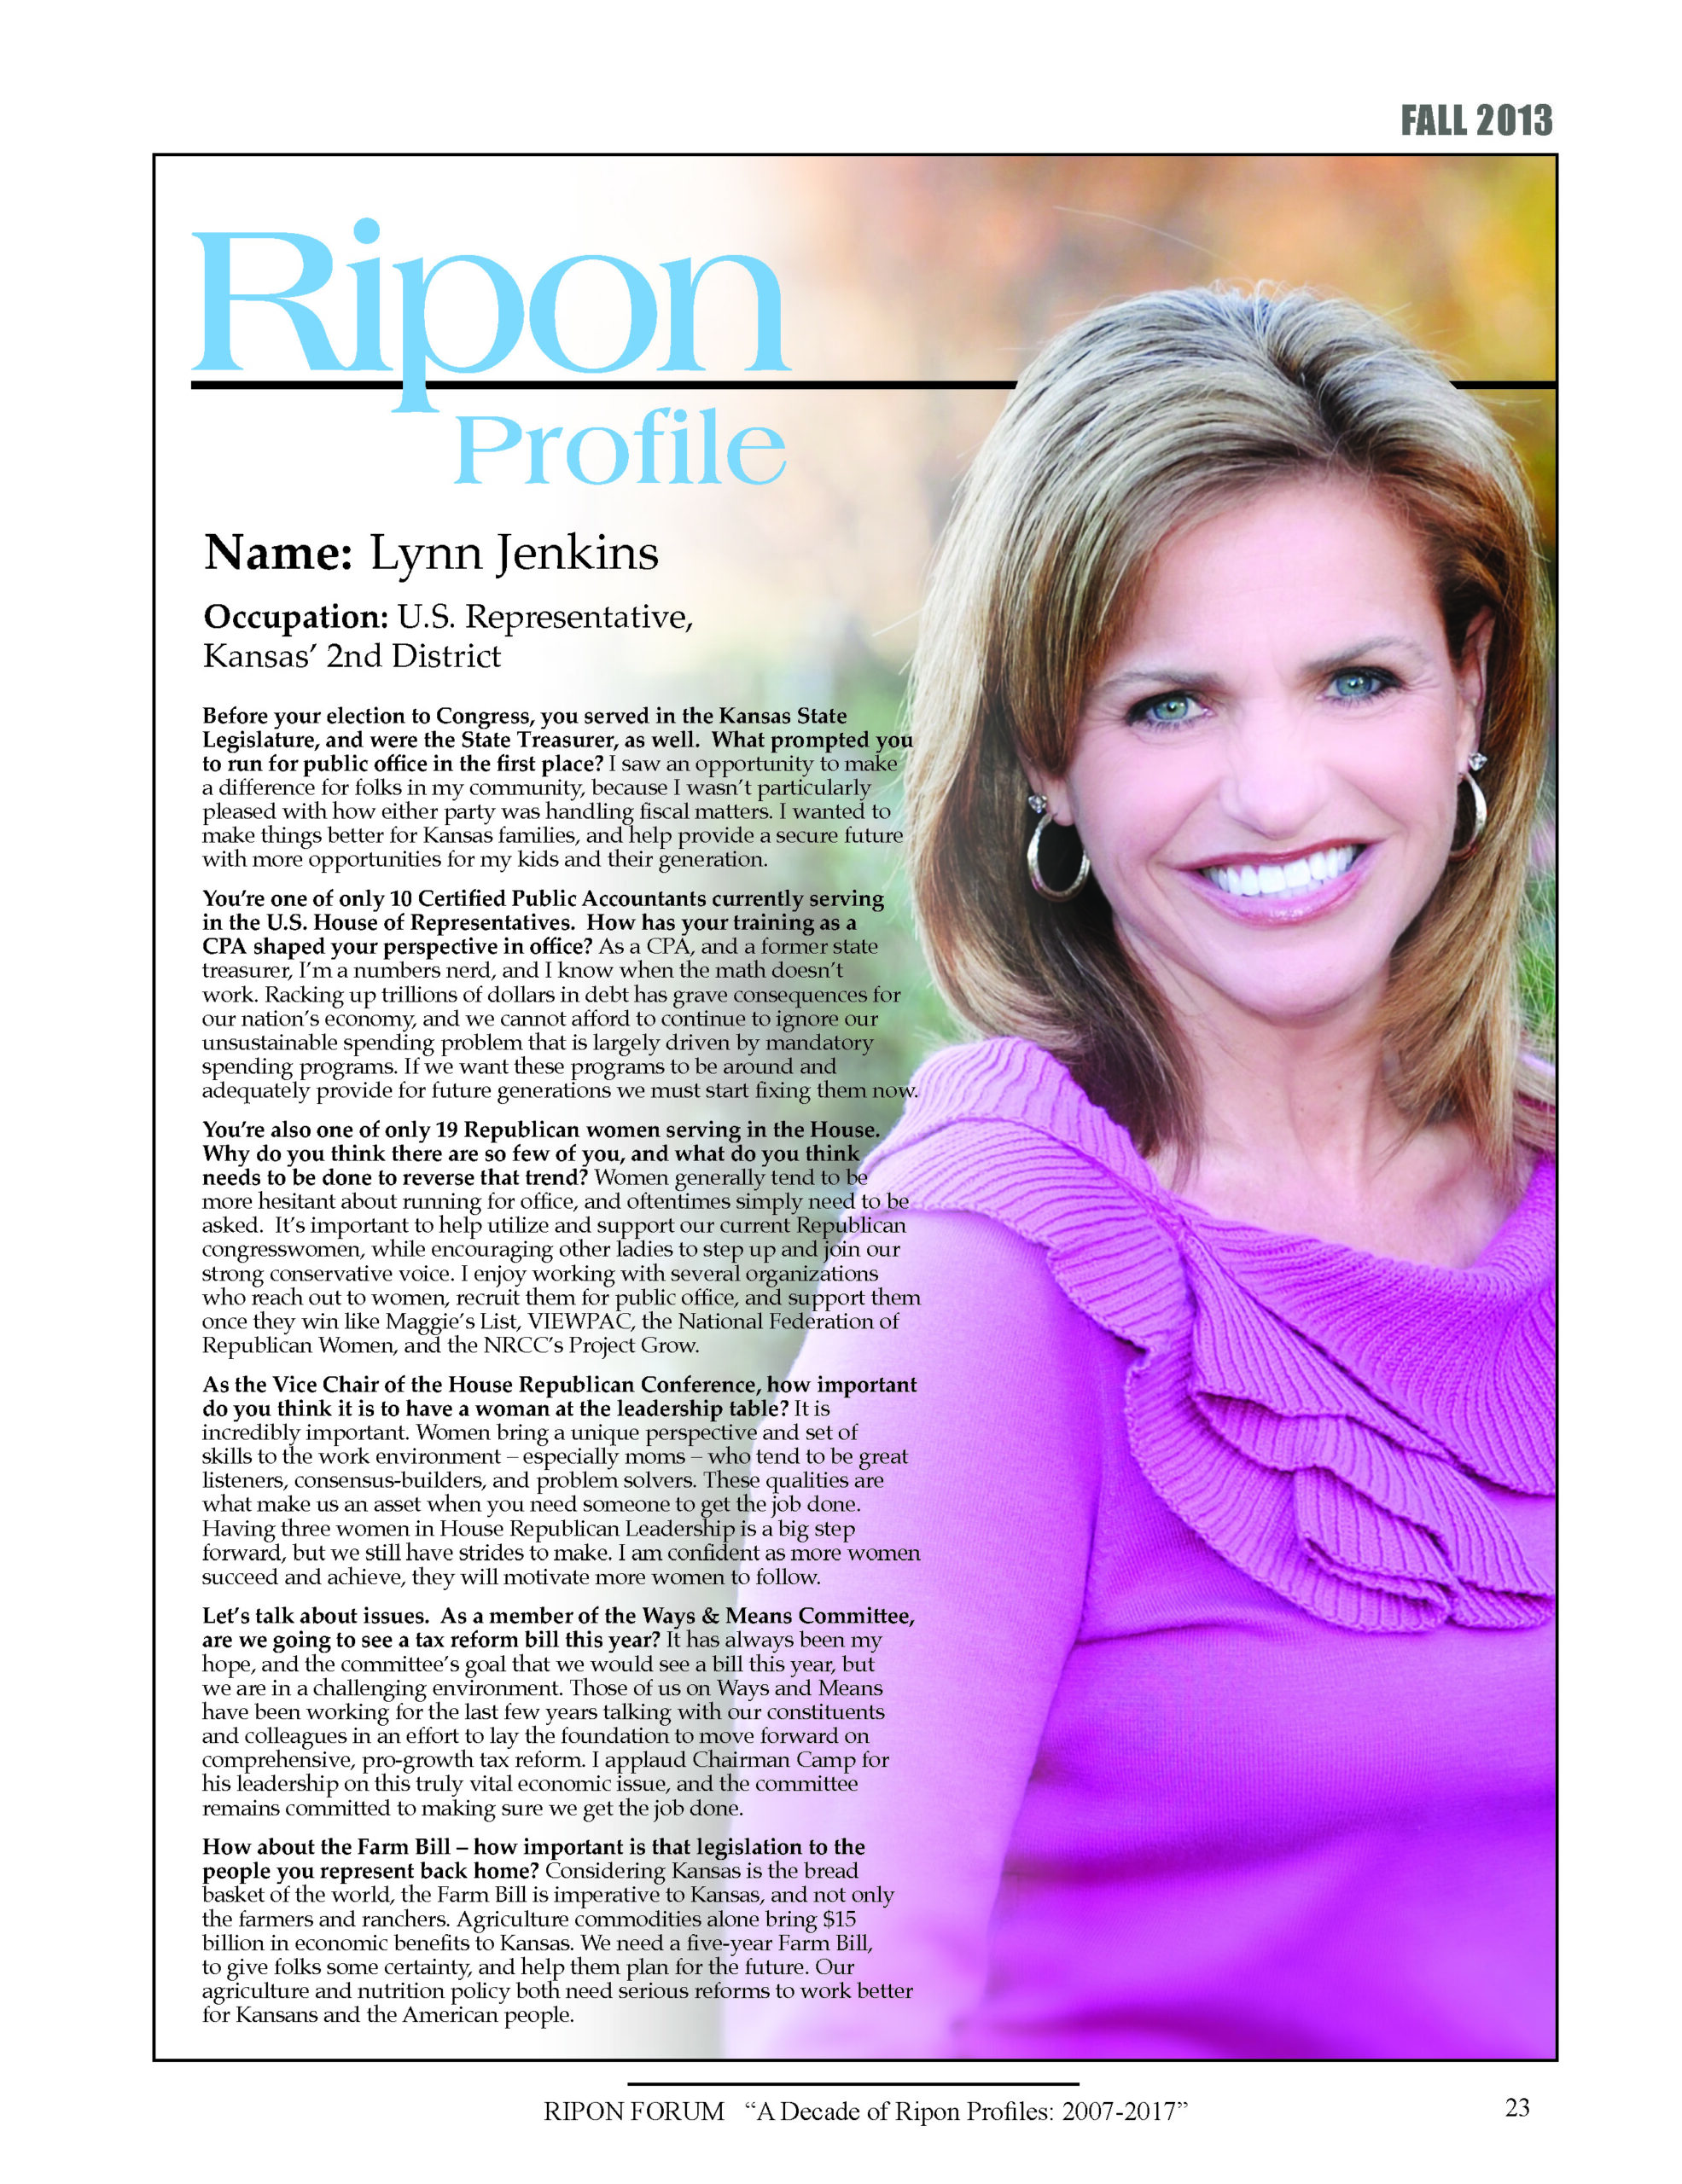 Ripon Profile of Lynn Jenkins